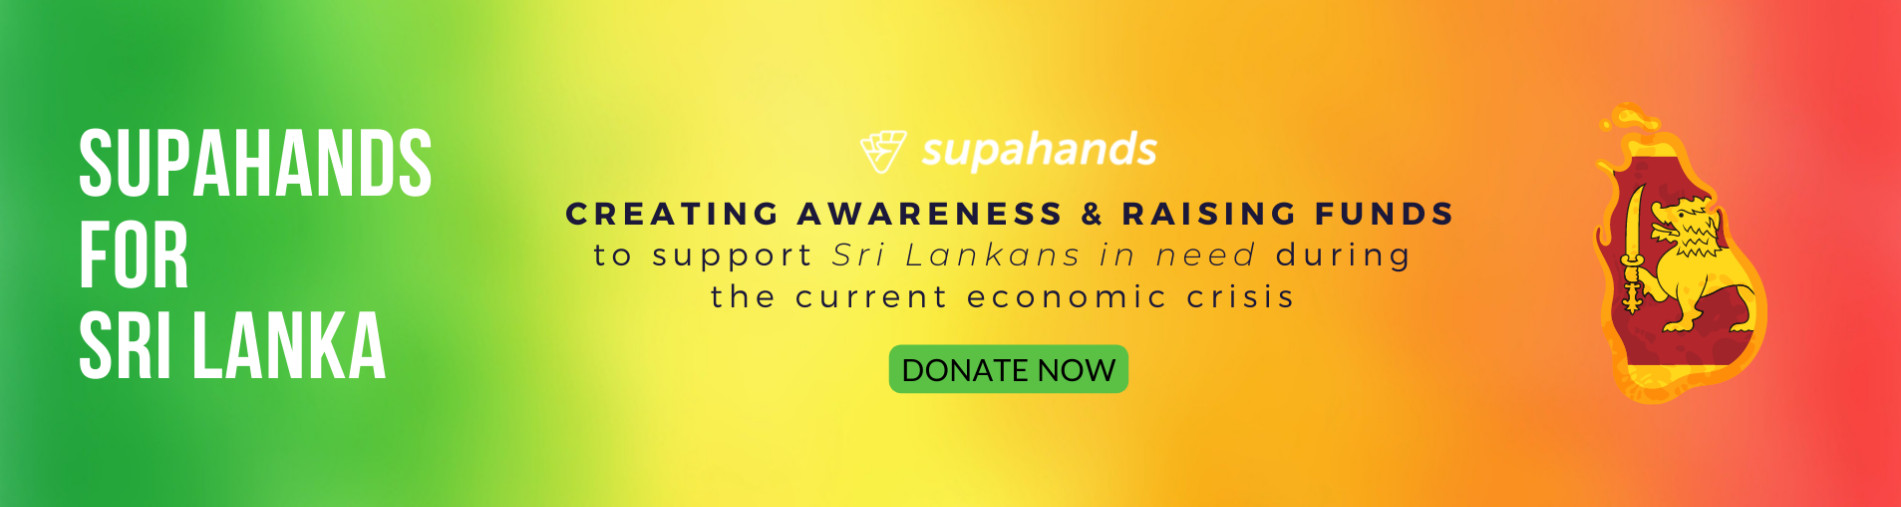 Supahands for Sri Lanka